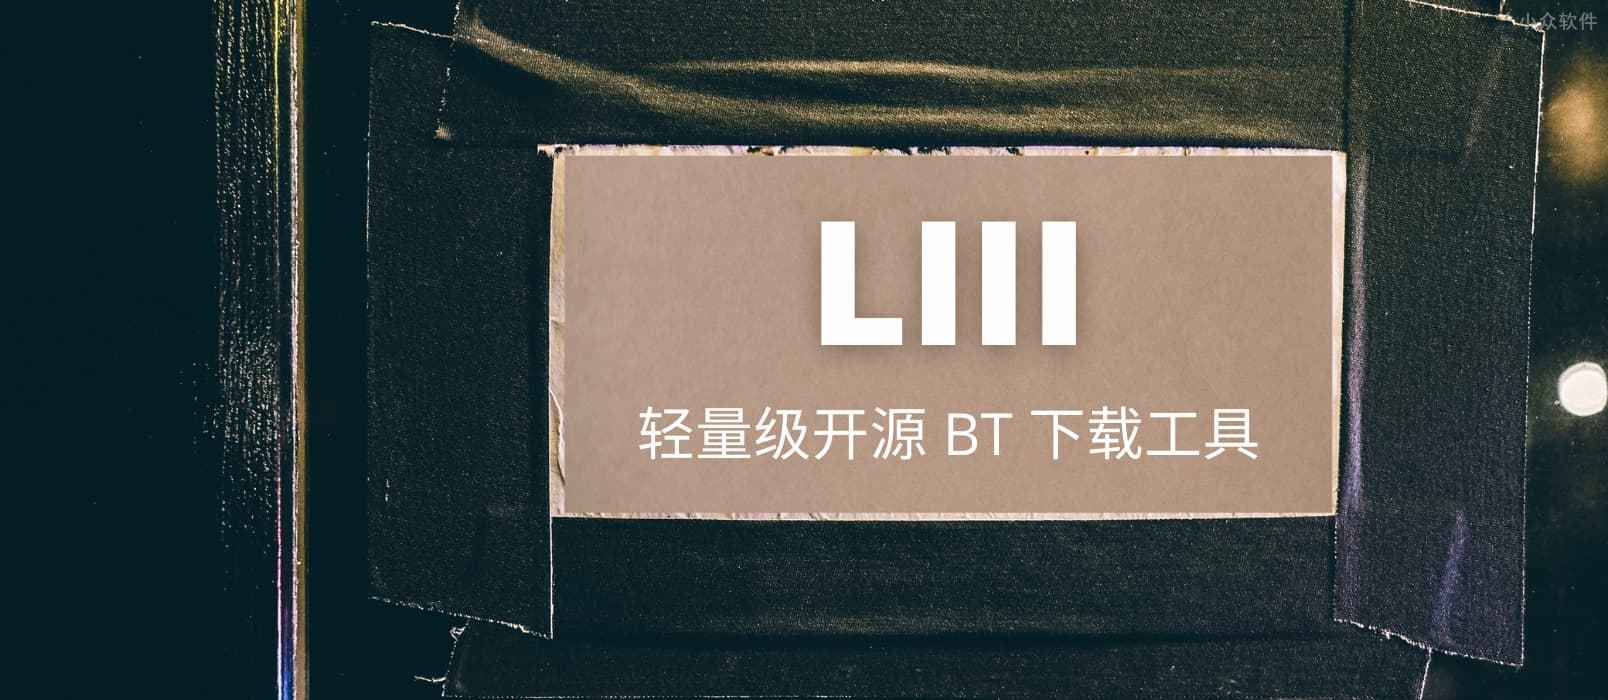 LIII BitTorrent Client – 轻量级开源 BT 下载工具[Windows]